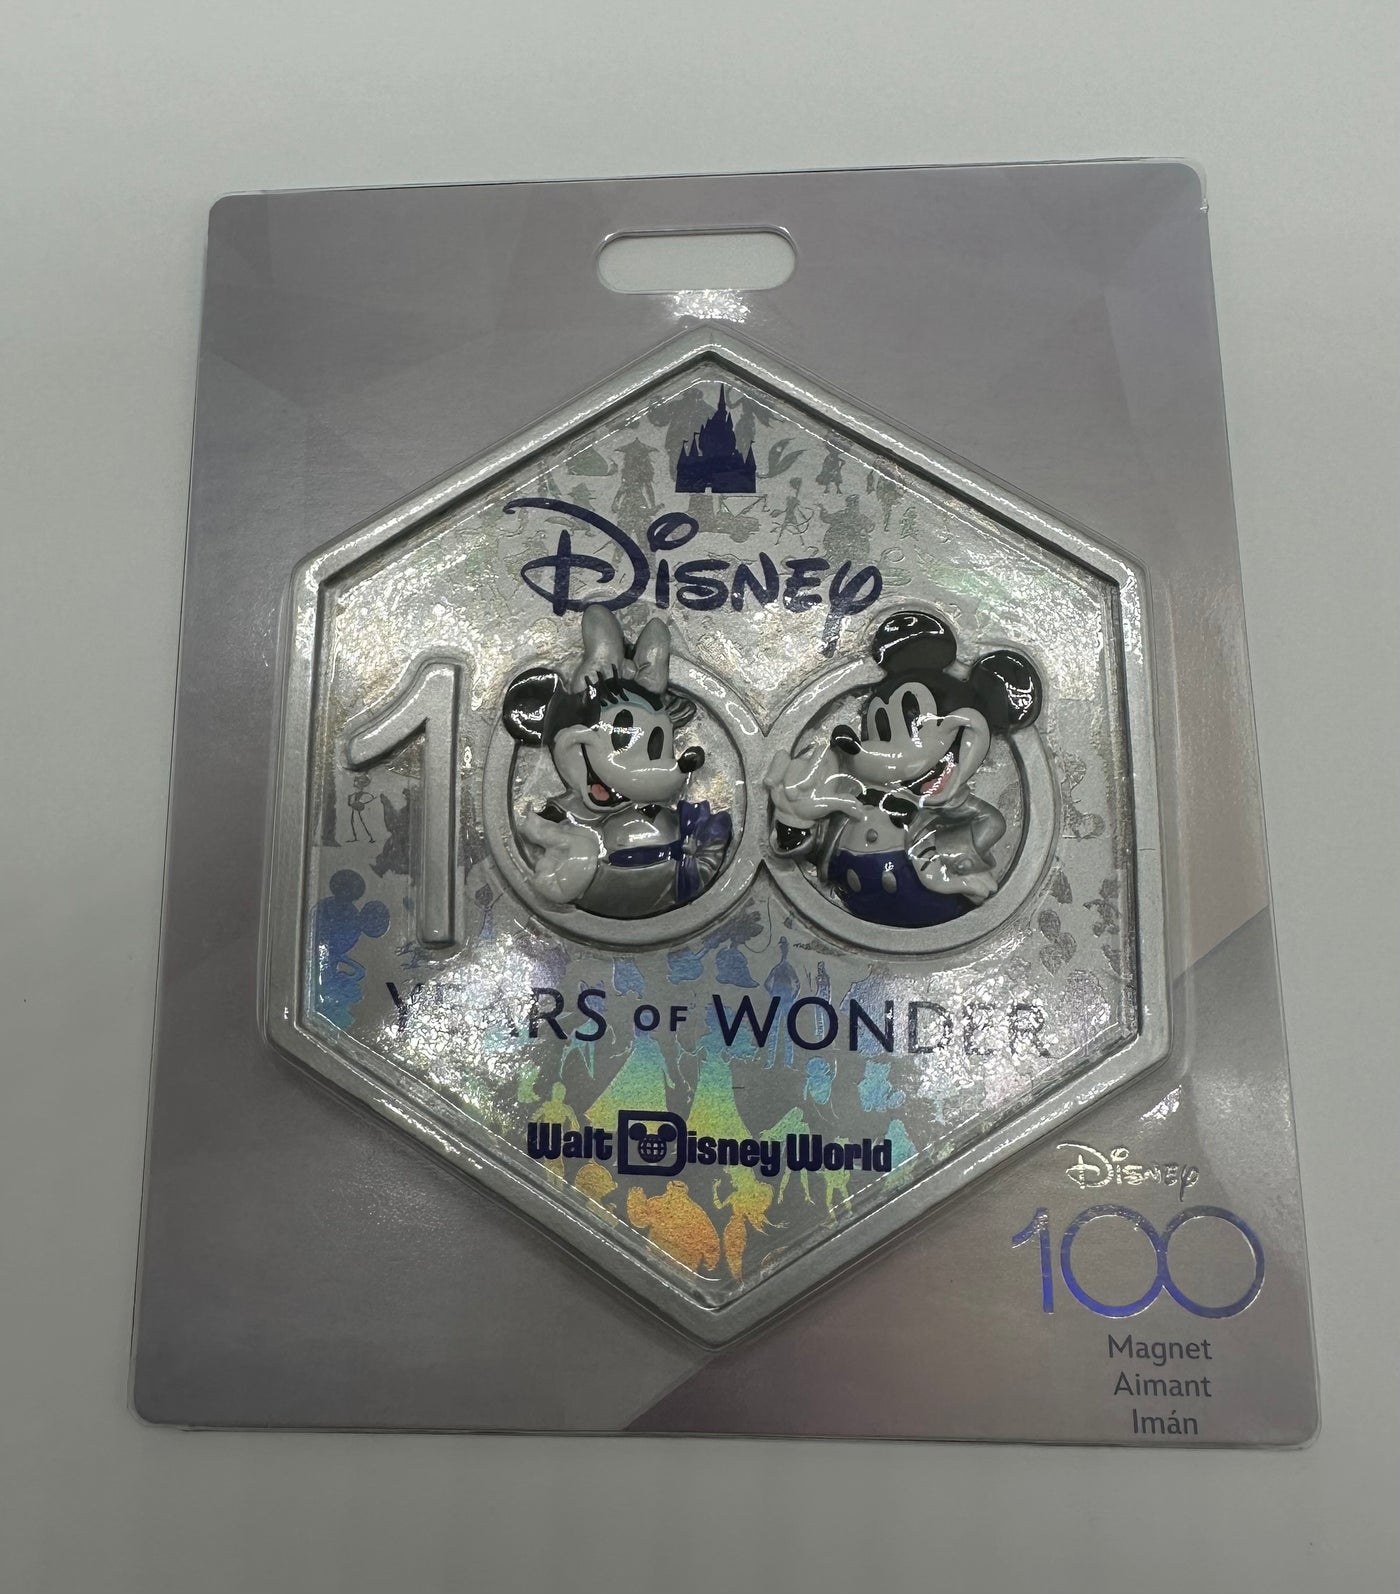 Disney Walt Disney World 100 Years of Wonder Mickey and Minnie Magnet New